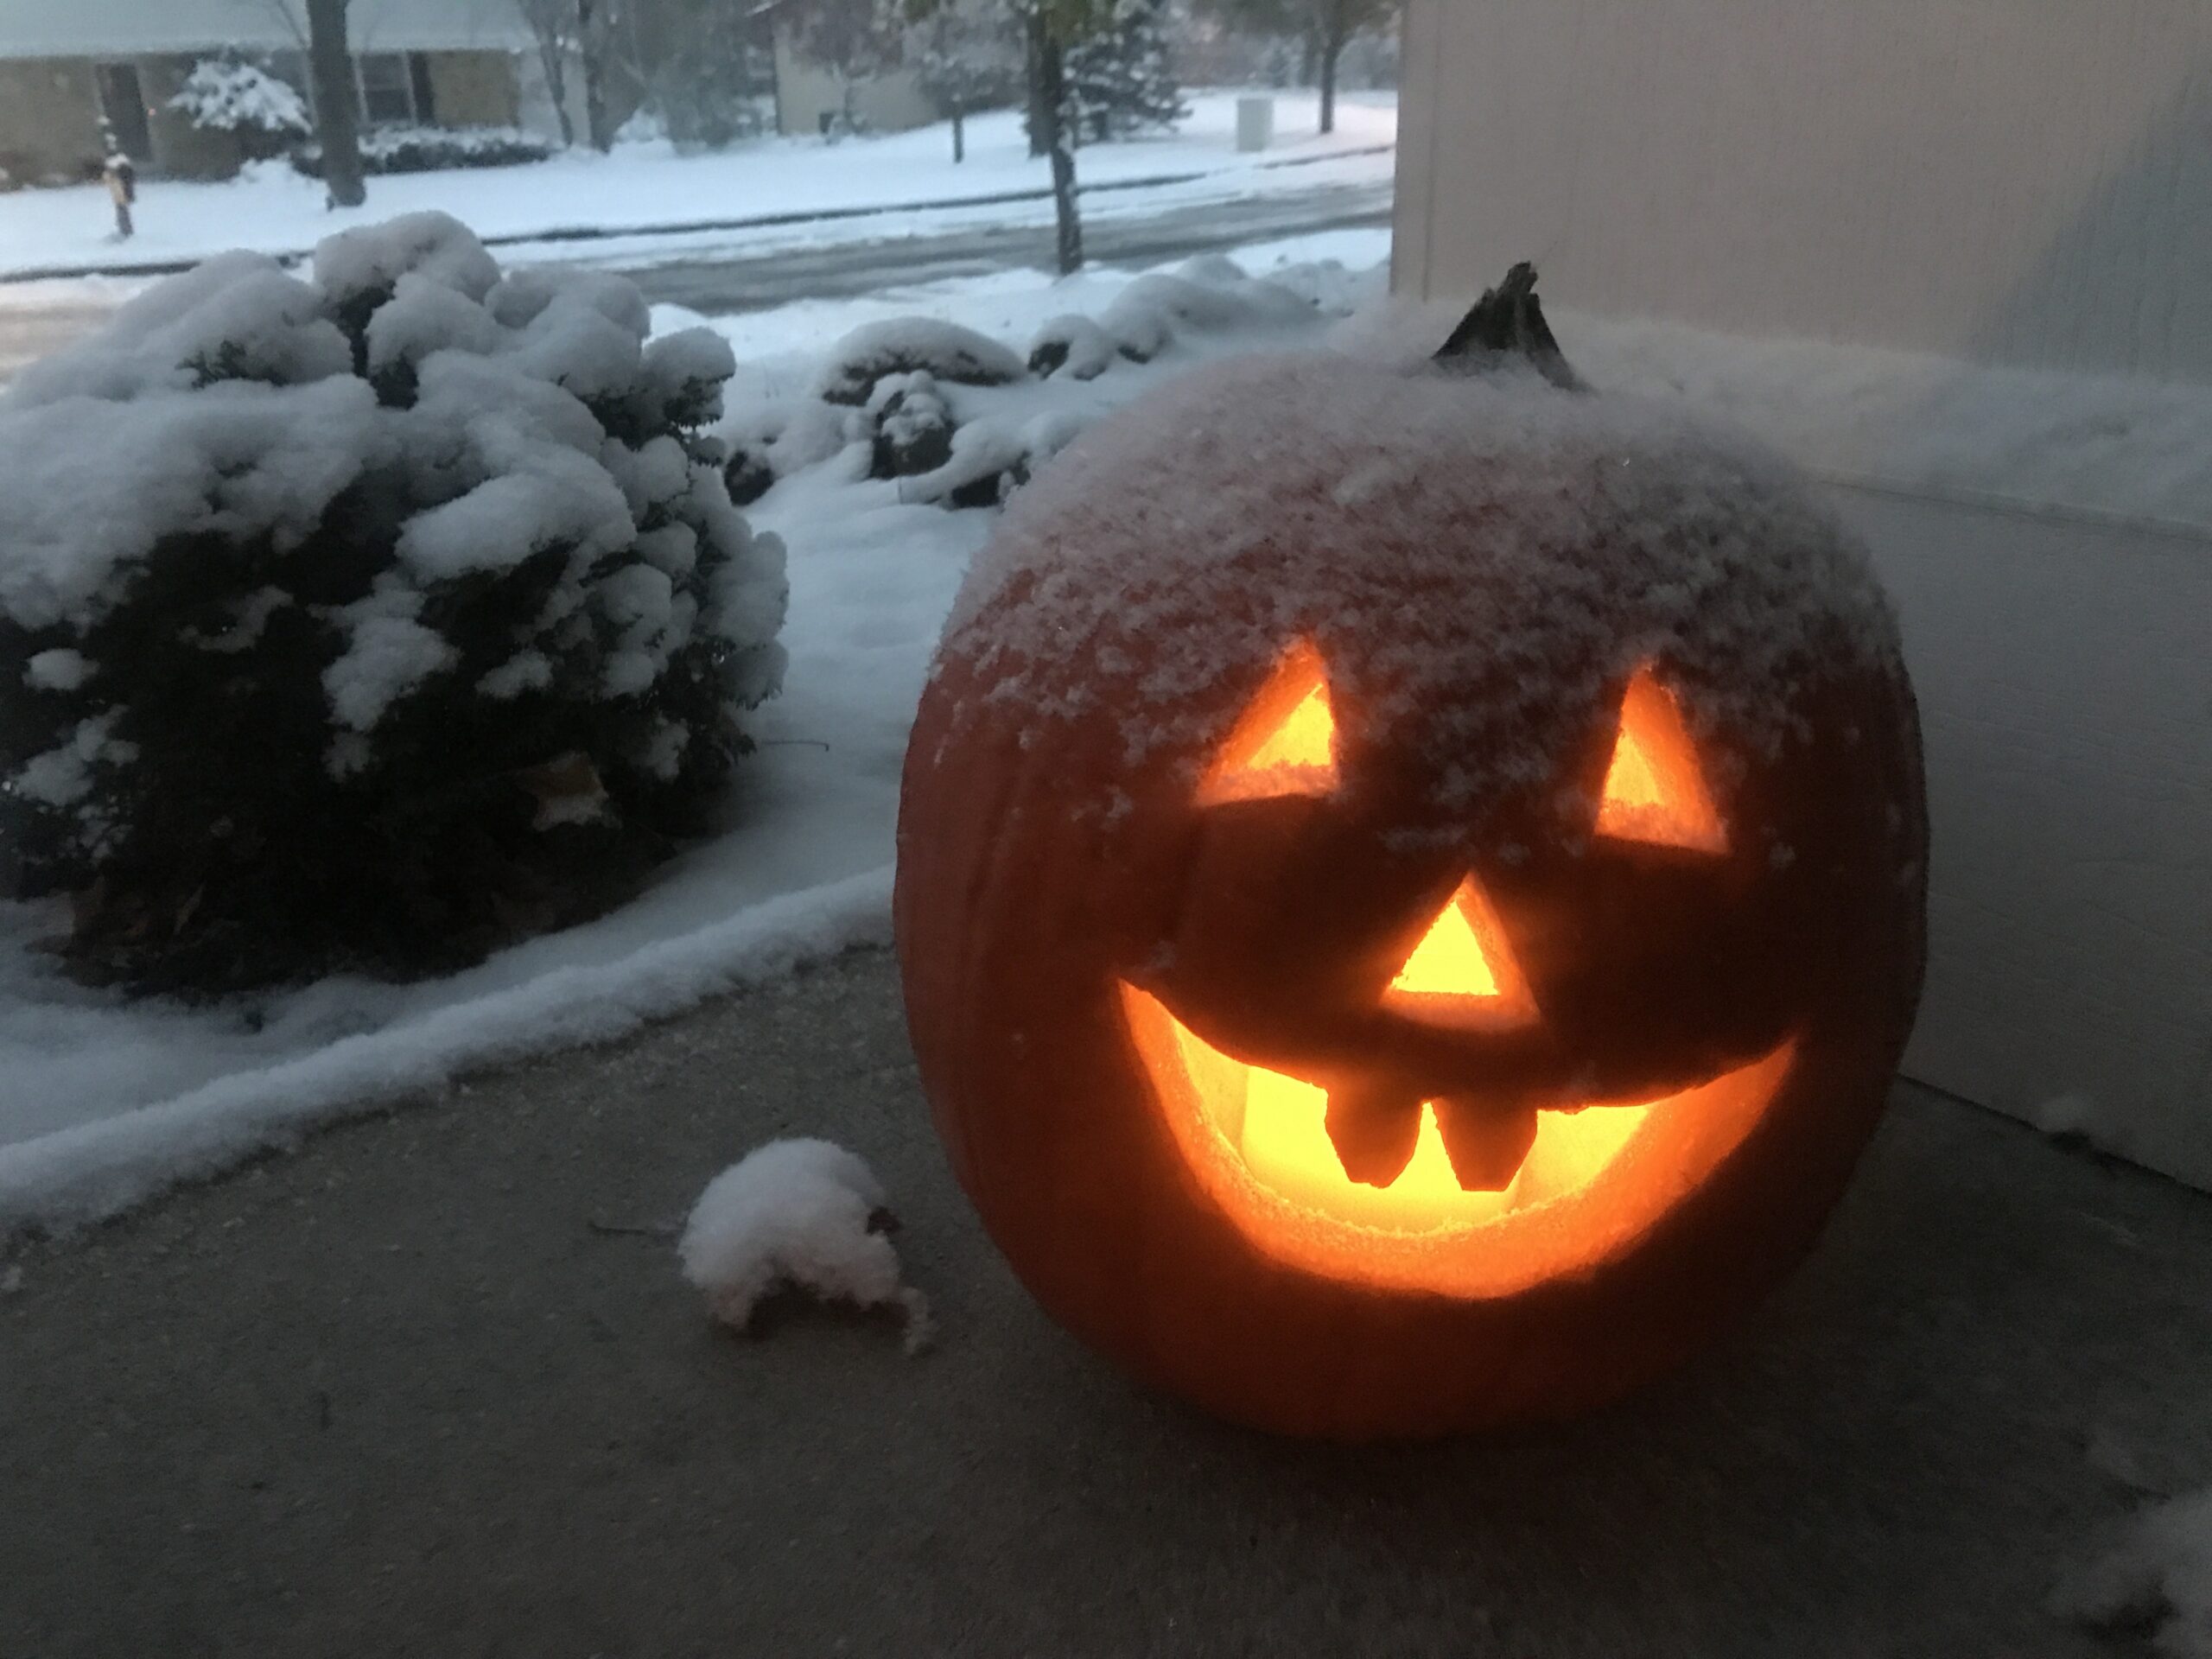 Snow on a pumpkin